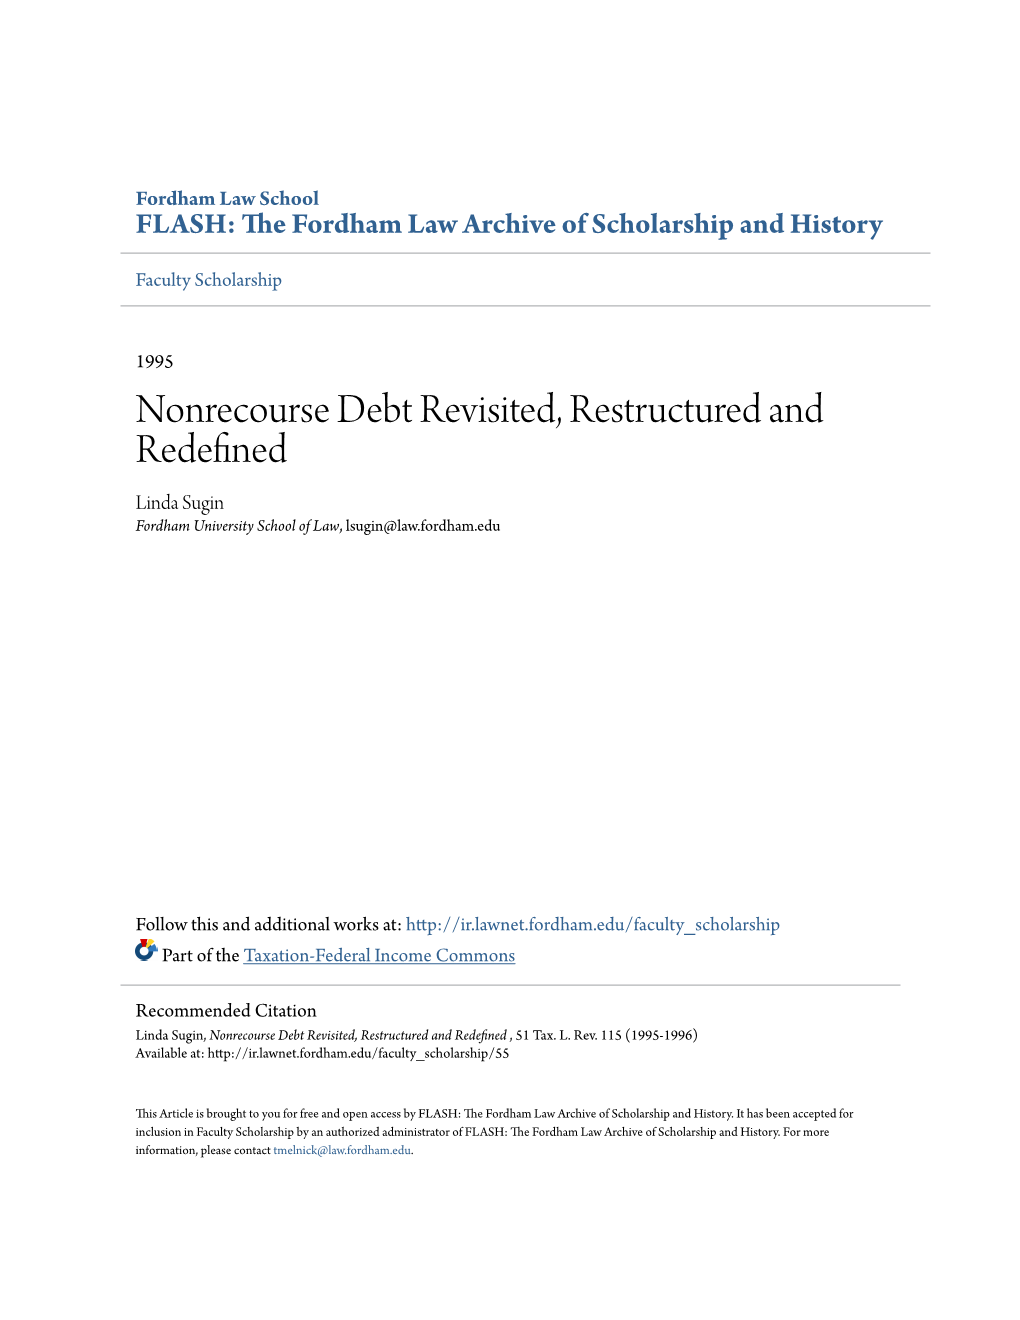 Nonrecourse Debt Revisited, Restructured and Redefined Linda Sugin Fordham University School of Law, Lsugin@Law.Fordham.Edu